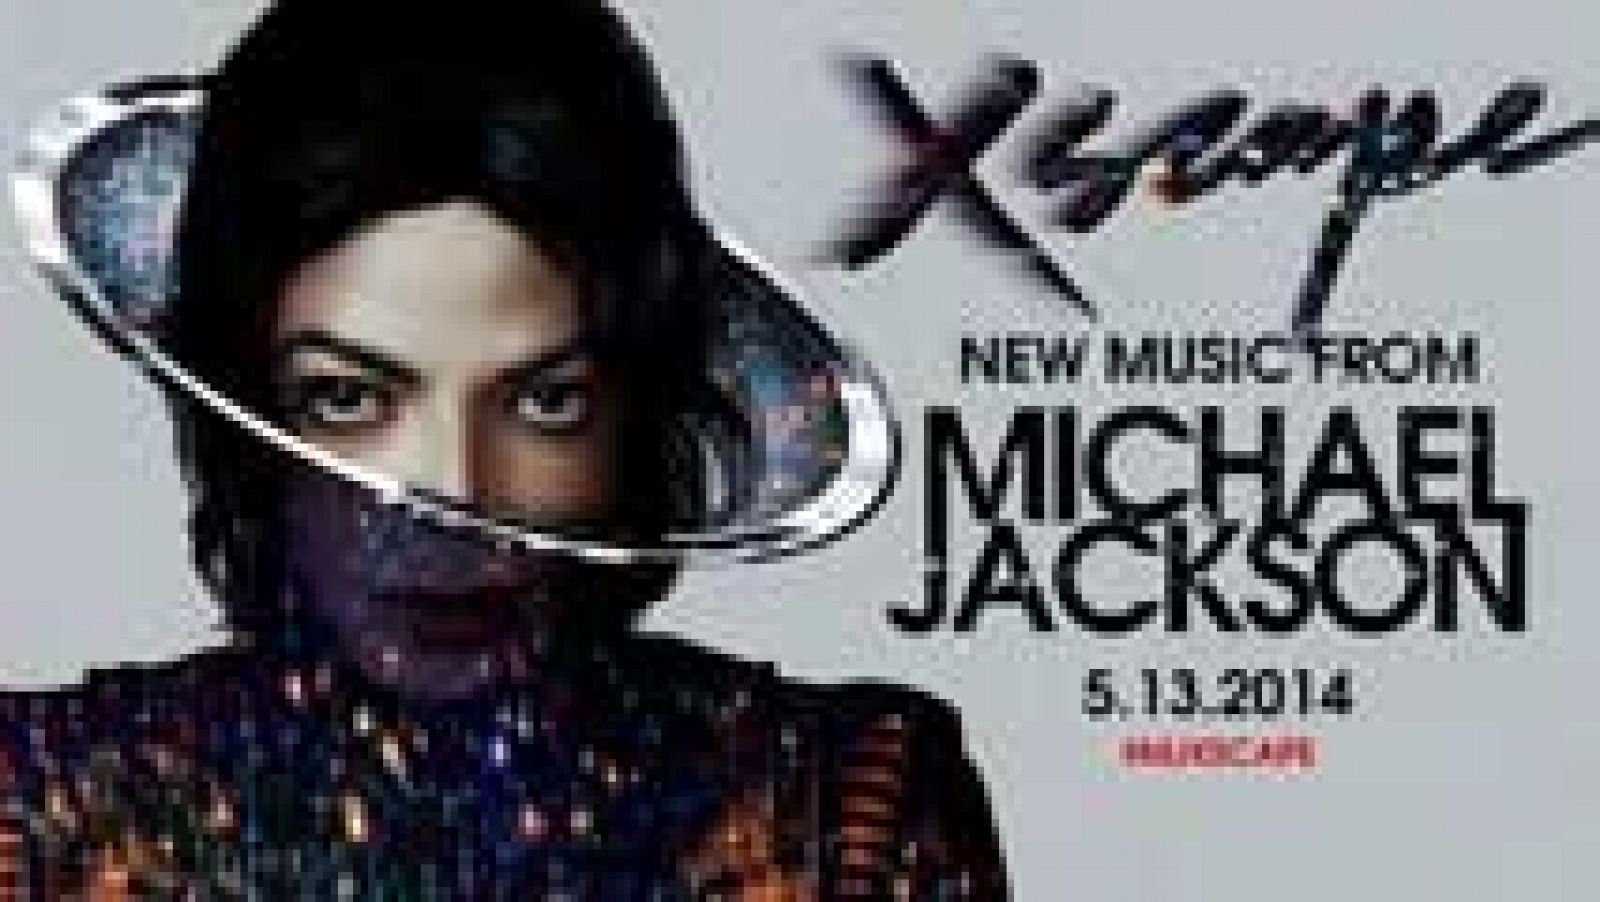 Sale a la venta 'Xscape', el 2º disco de Michael Jackson l RTVE